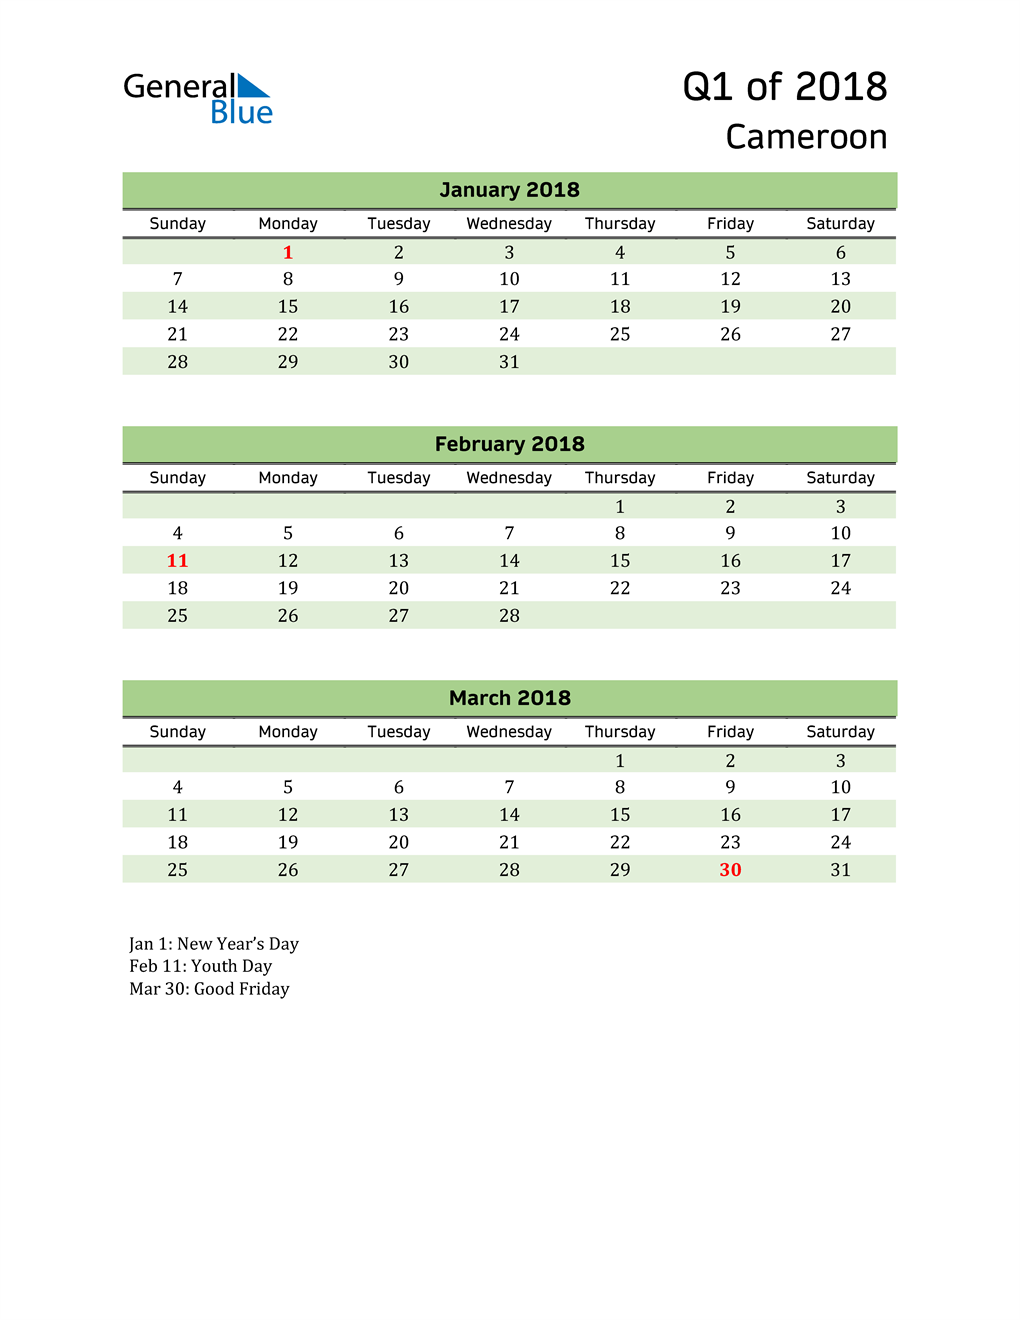  Quarterly Calendar 2018 with Cameroon Holidays 